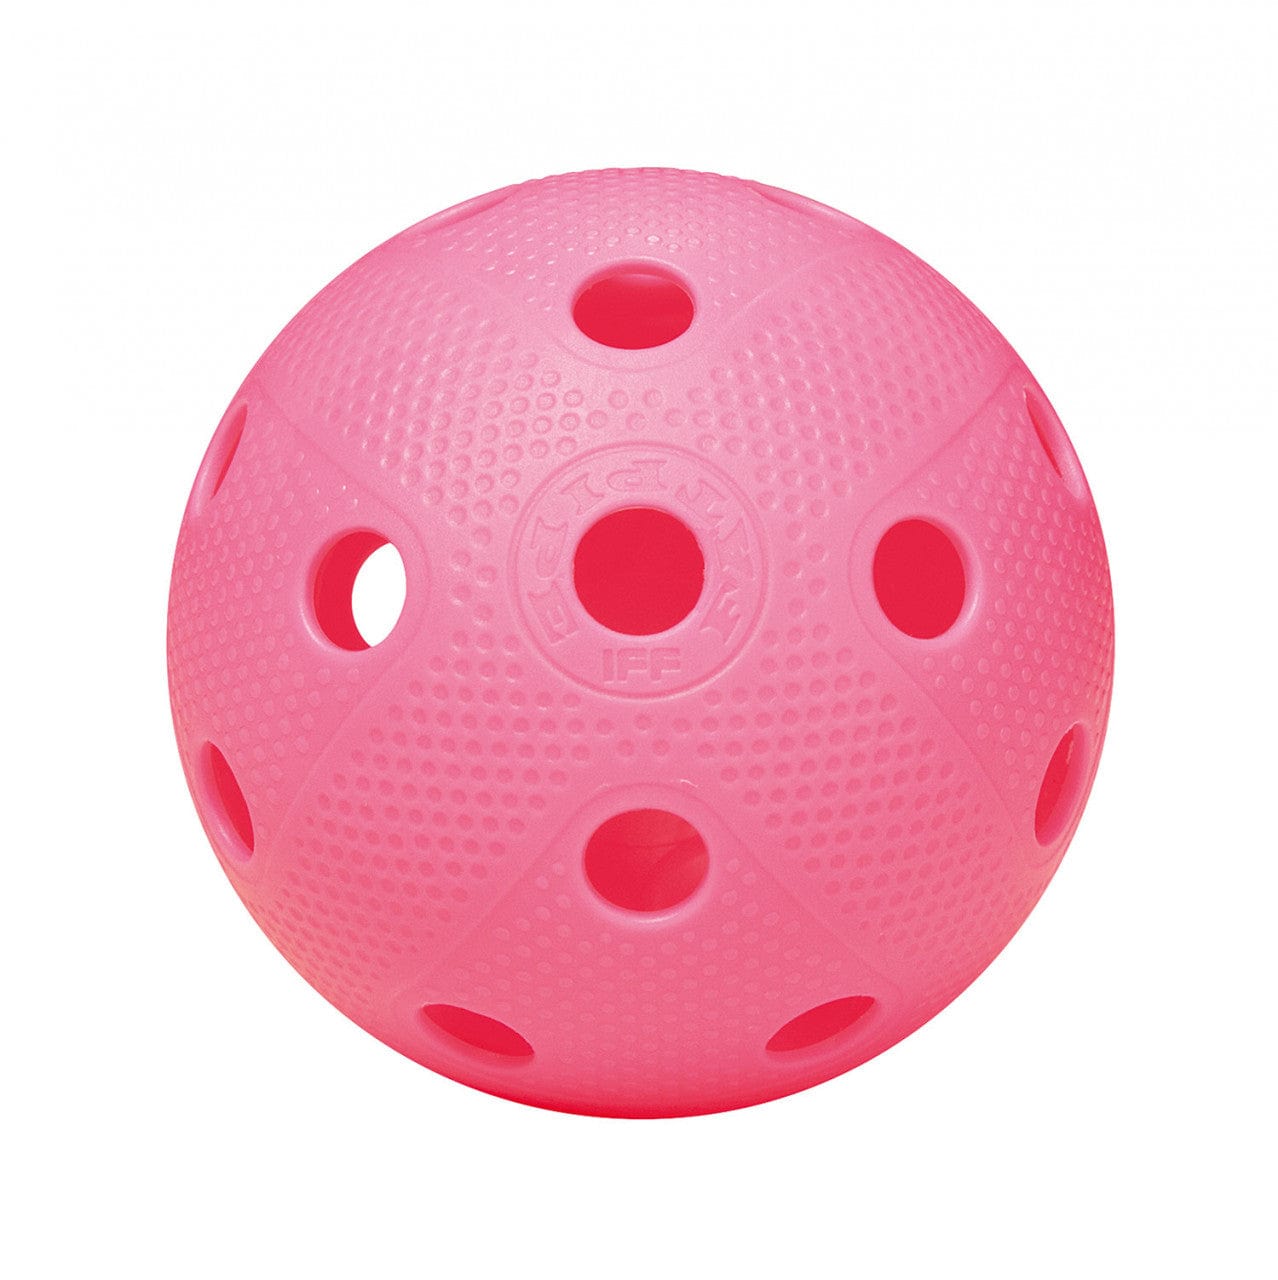 HockeyBall Floorball Ball - Pink - TheHockeyShop.com